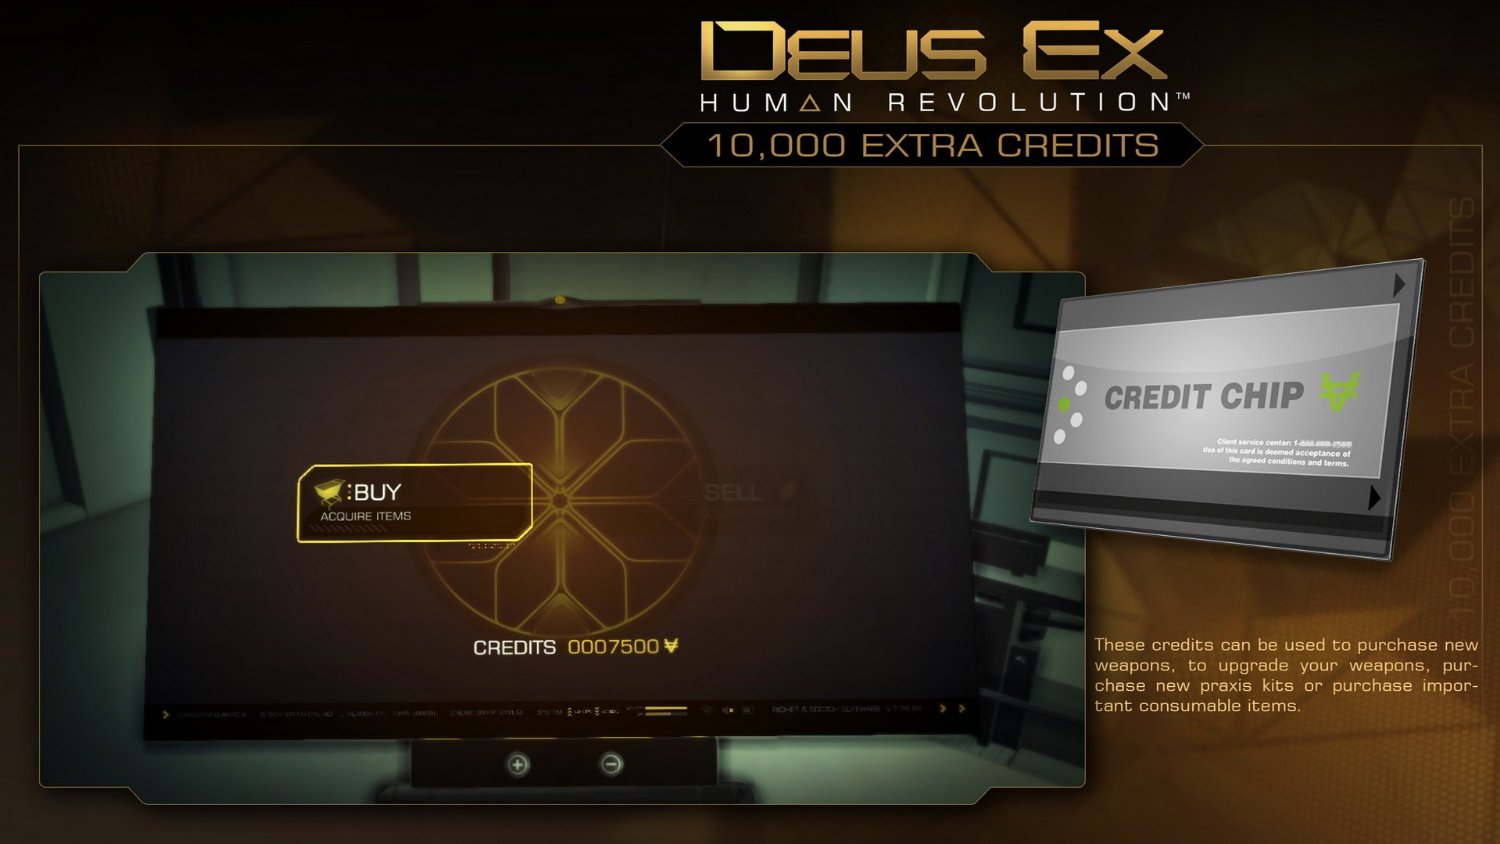 Deus Ex: Human Revolution Tactical Pack Steam - Click Image to Close